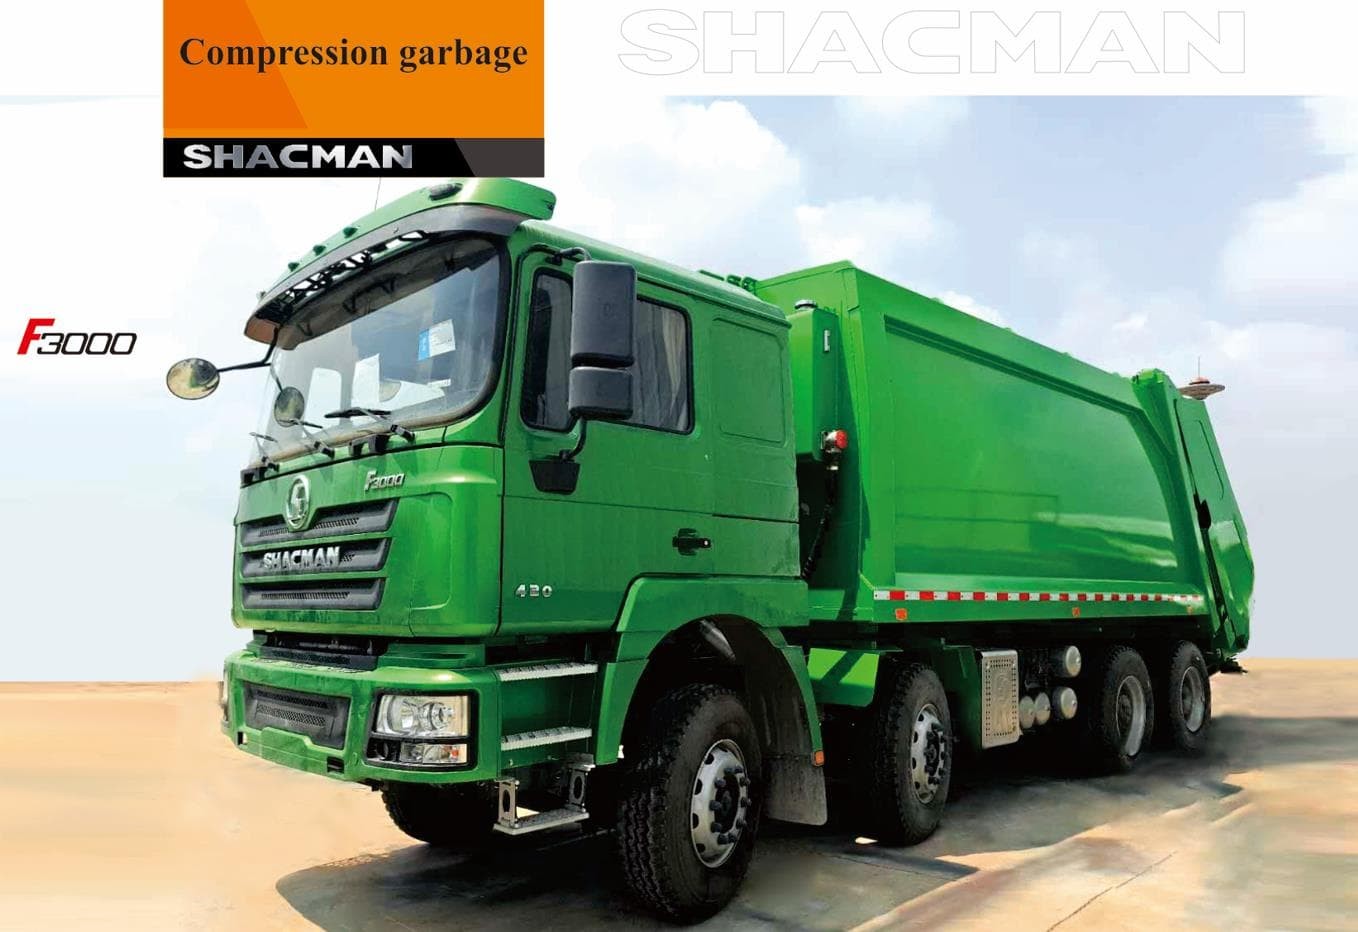 Compression Garbage Truck Suppliers